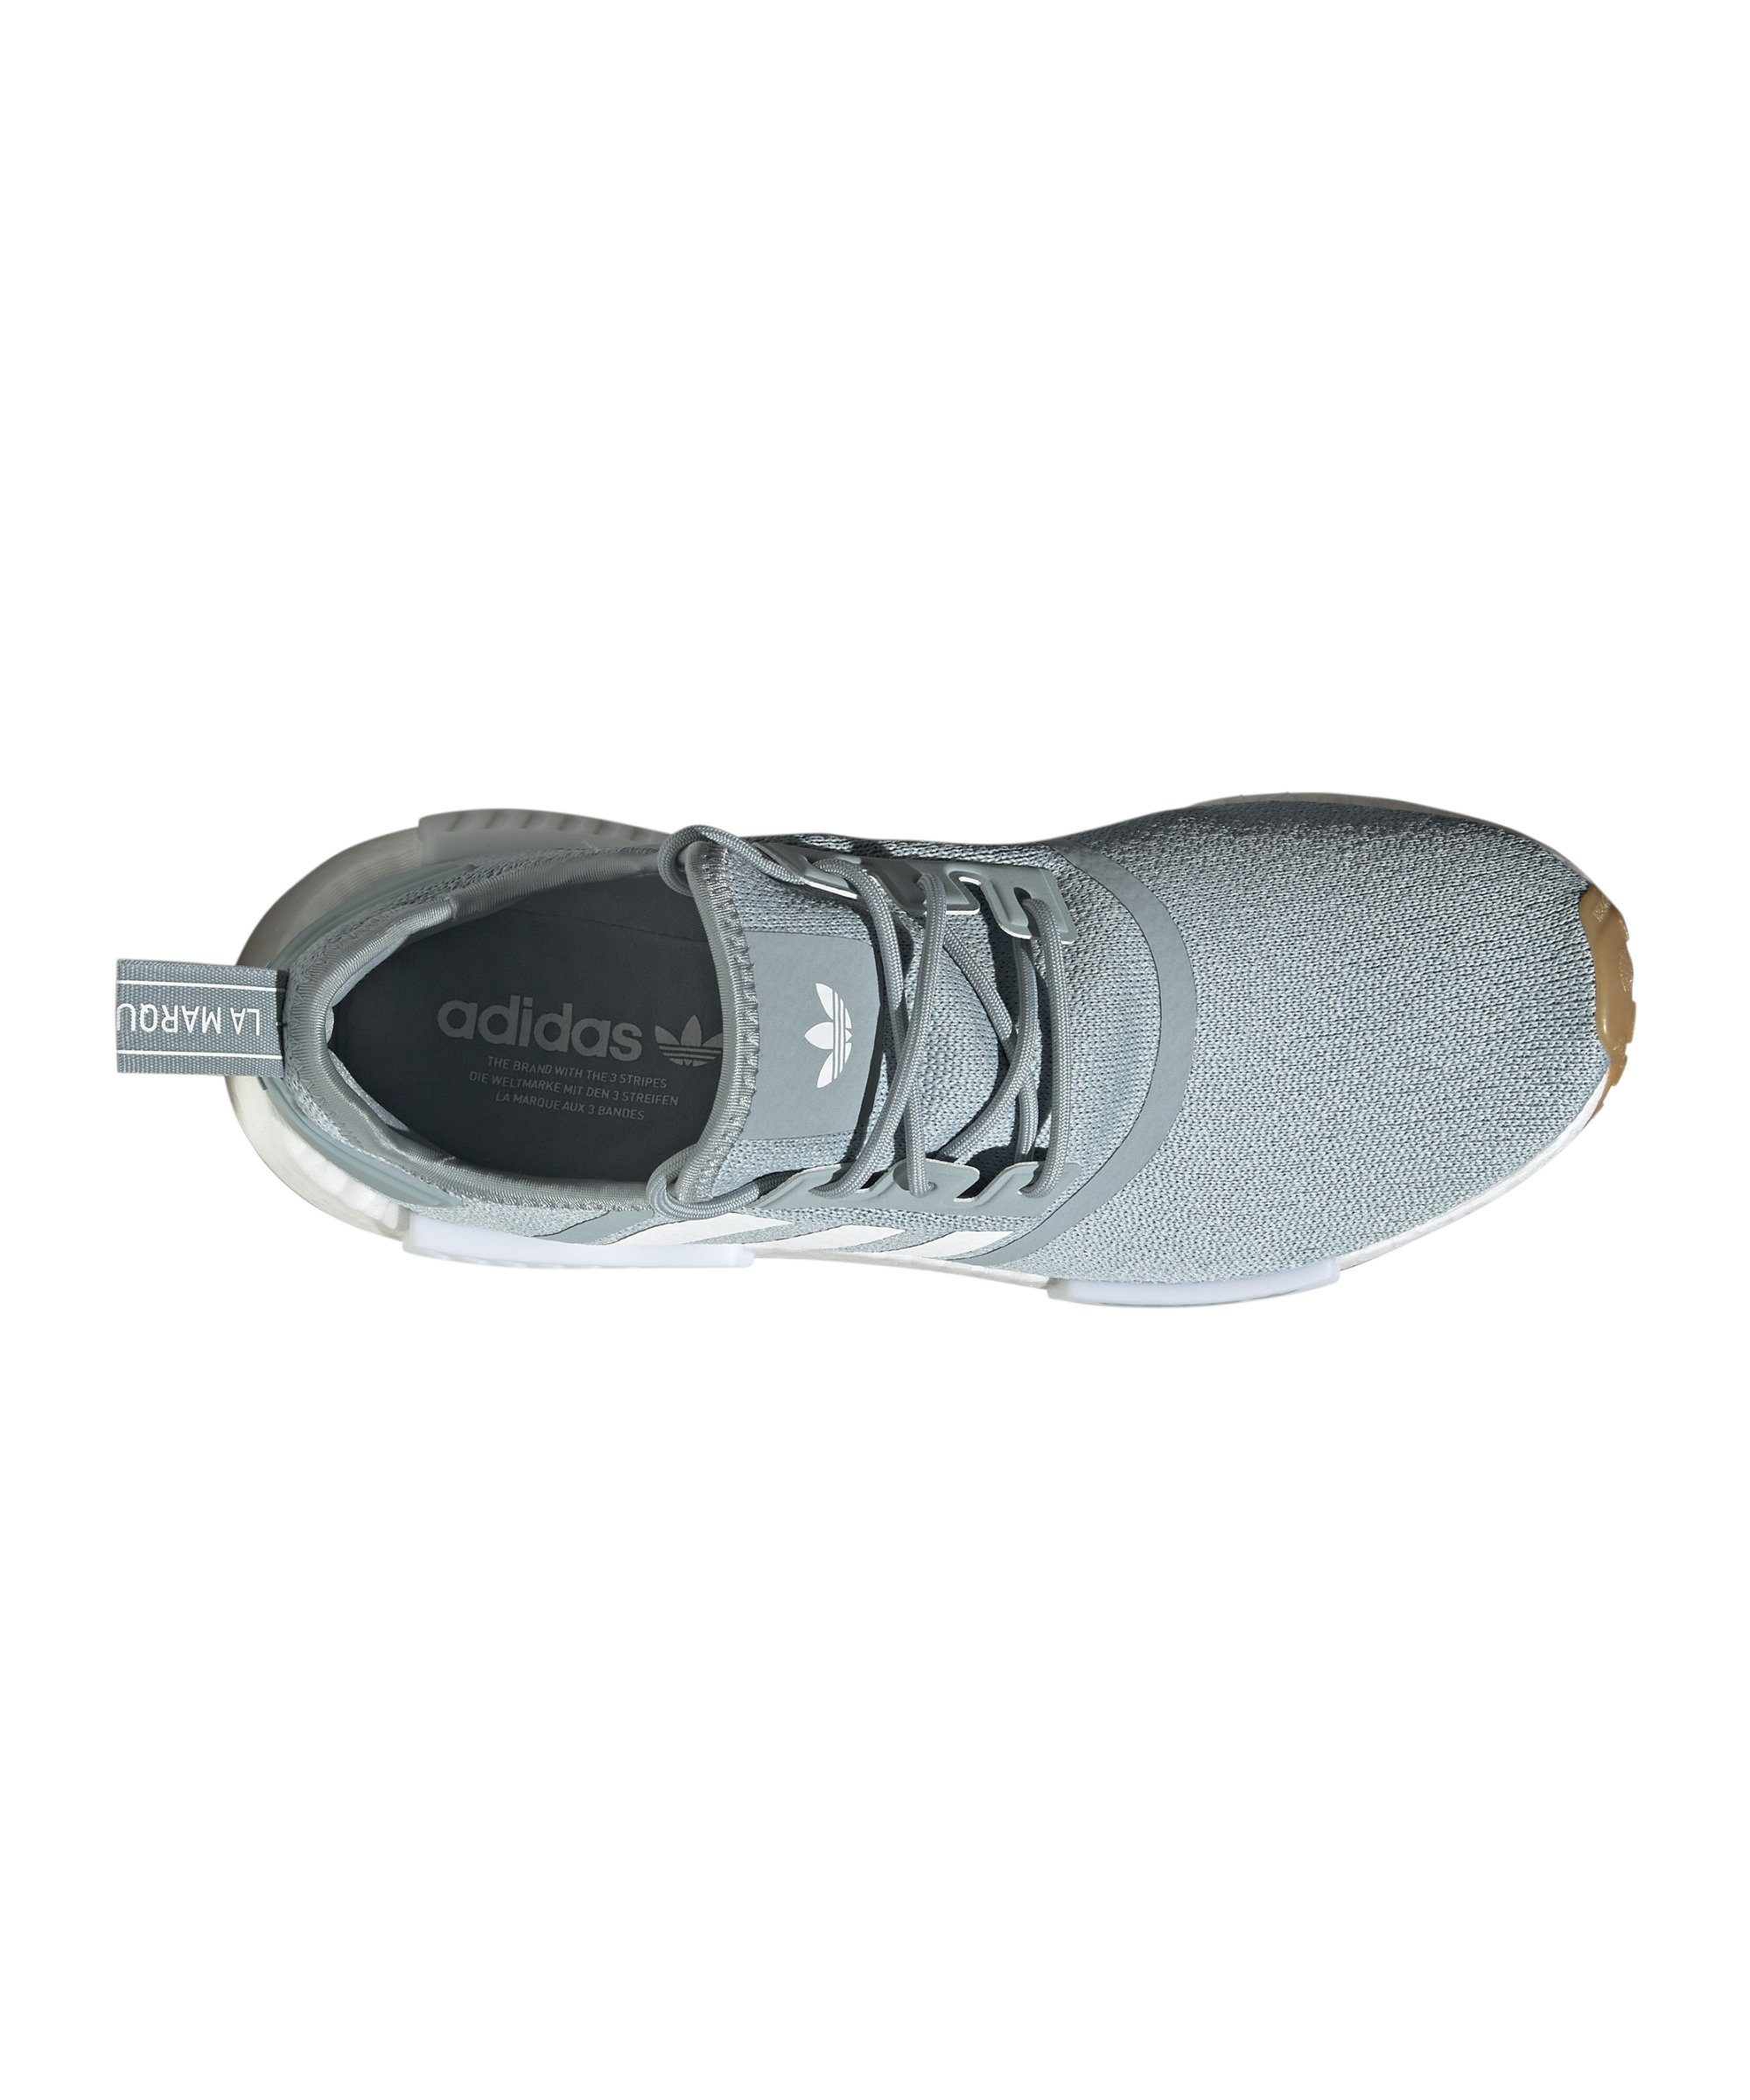 Originals NMD_R1 Sneaker adidas